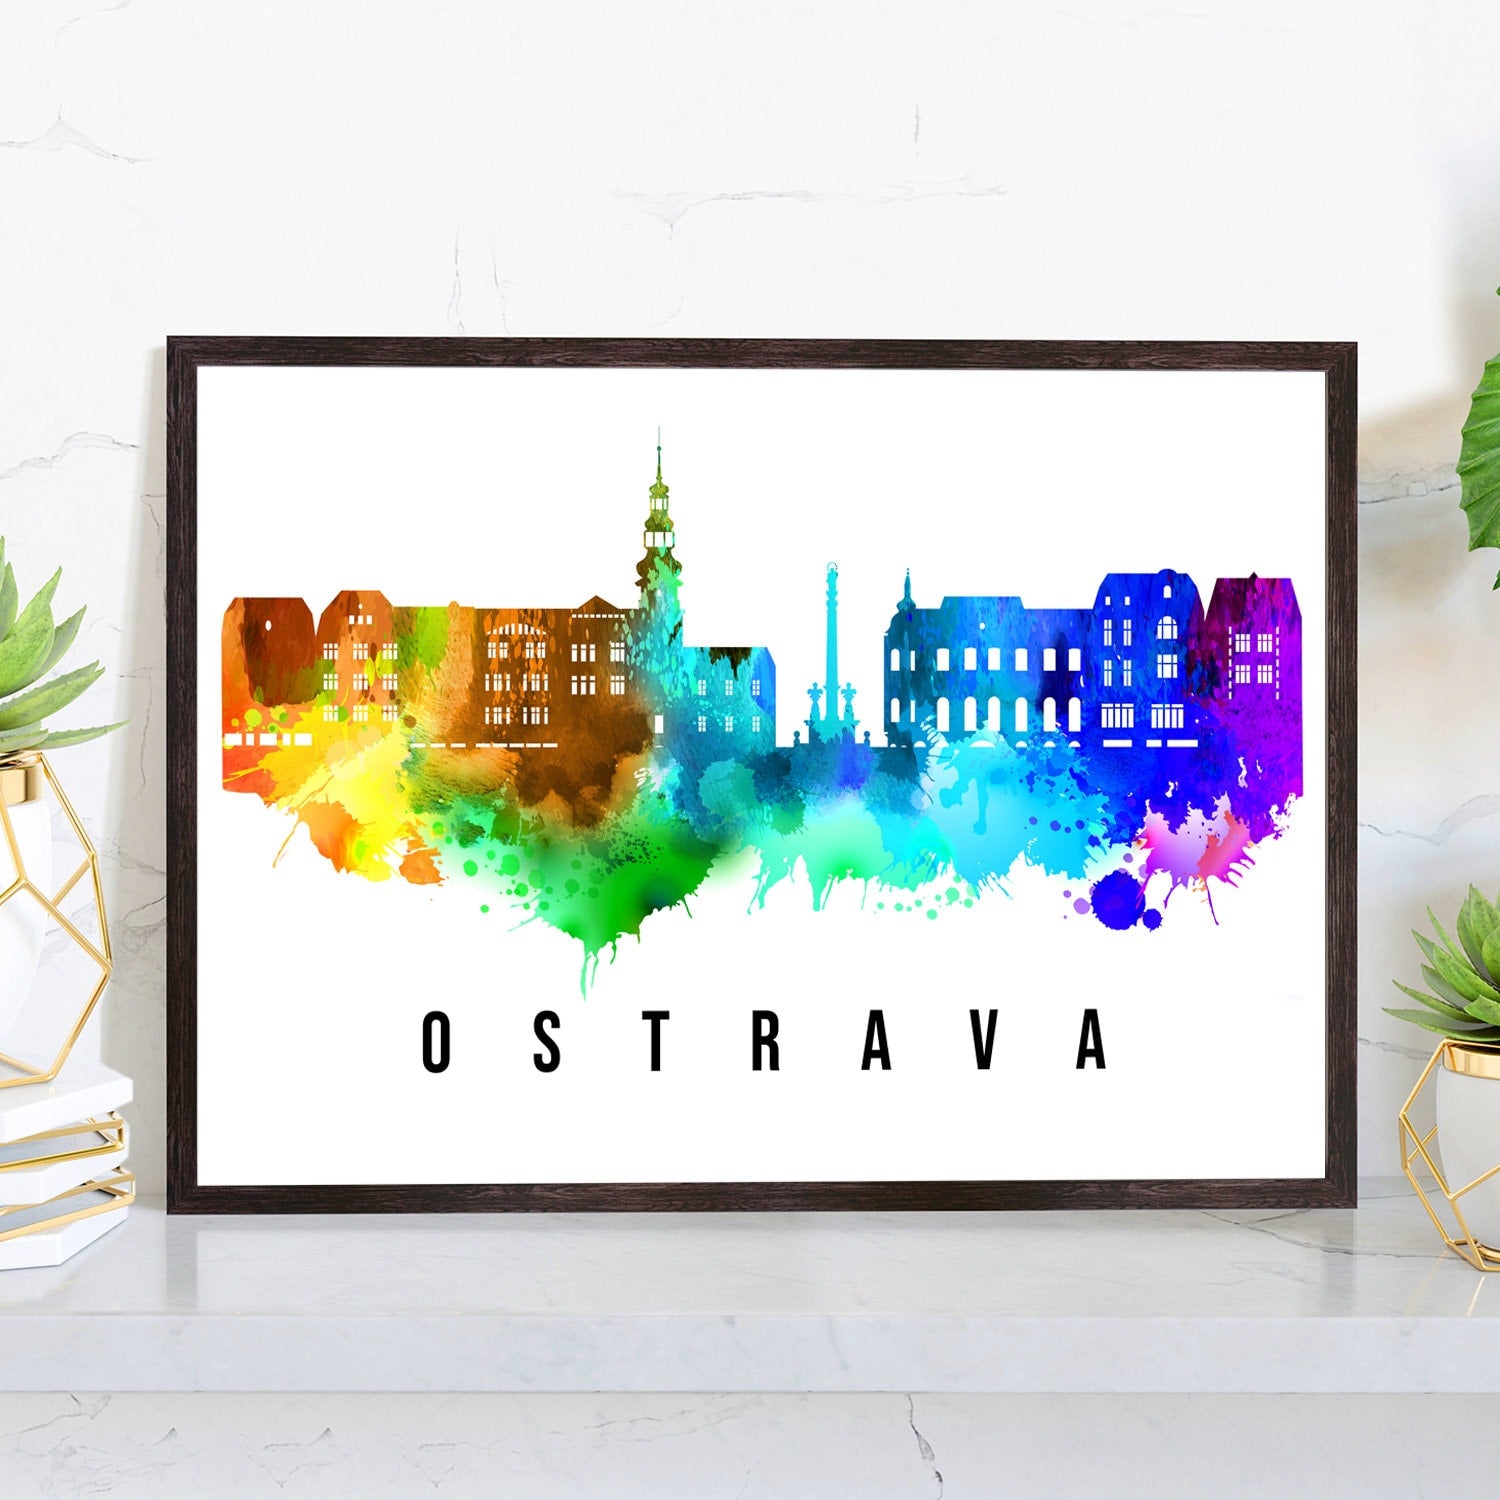 Ostrava Czech Republic Poster, Skyline poster cityscape poster, Landmark City Illustration poster, Home wall decoration, Office wall art